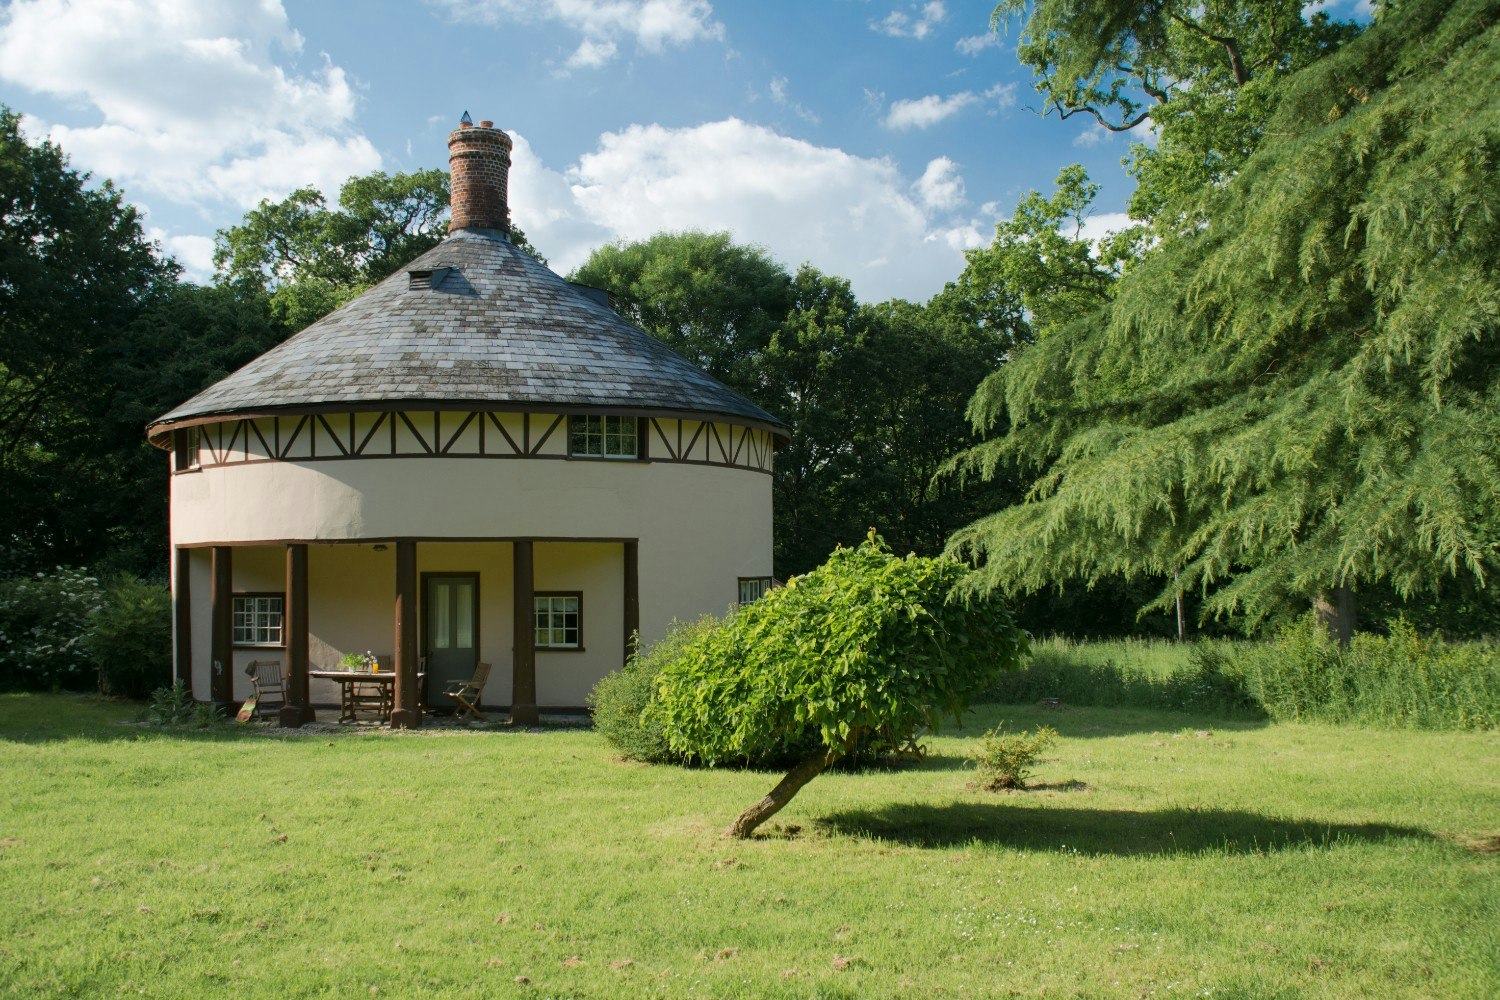 The Round House in Suffolk